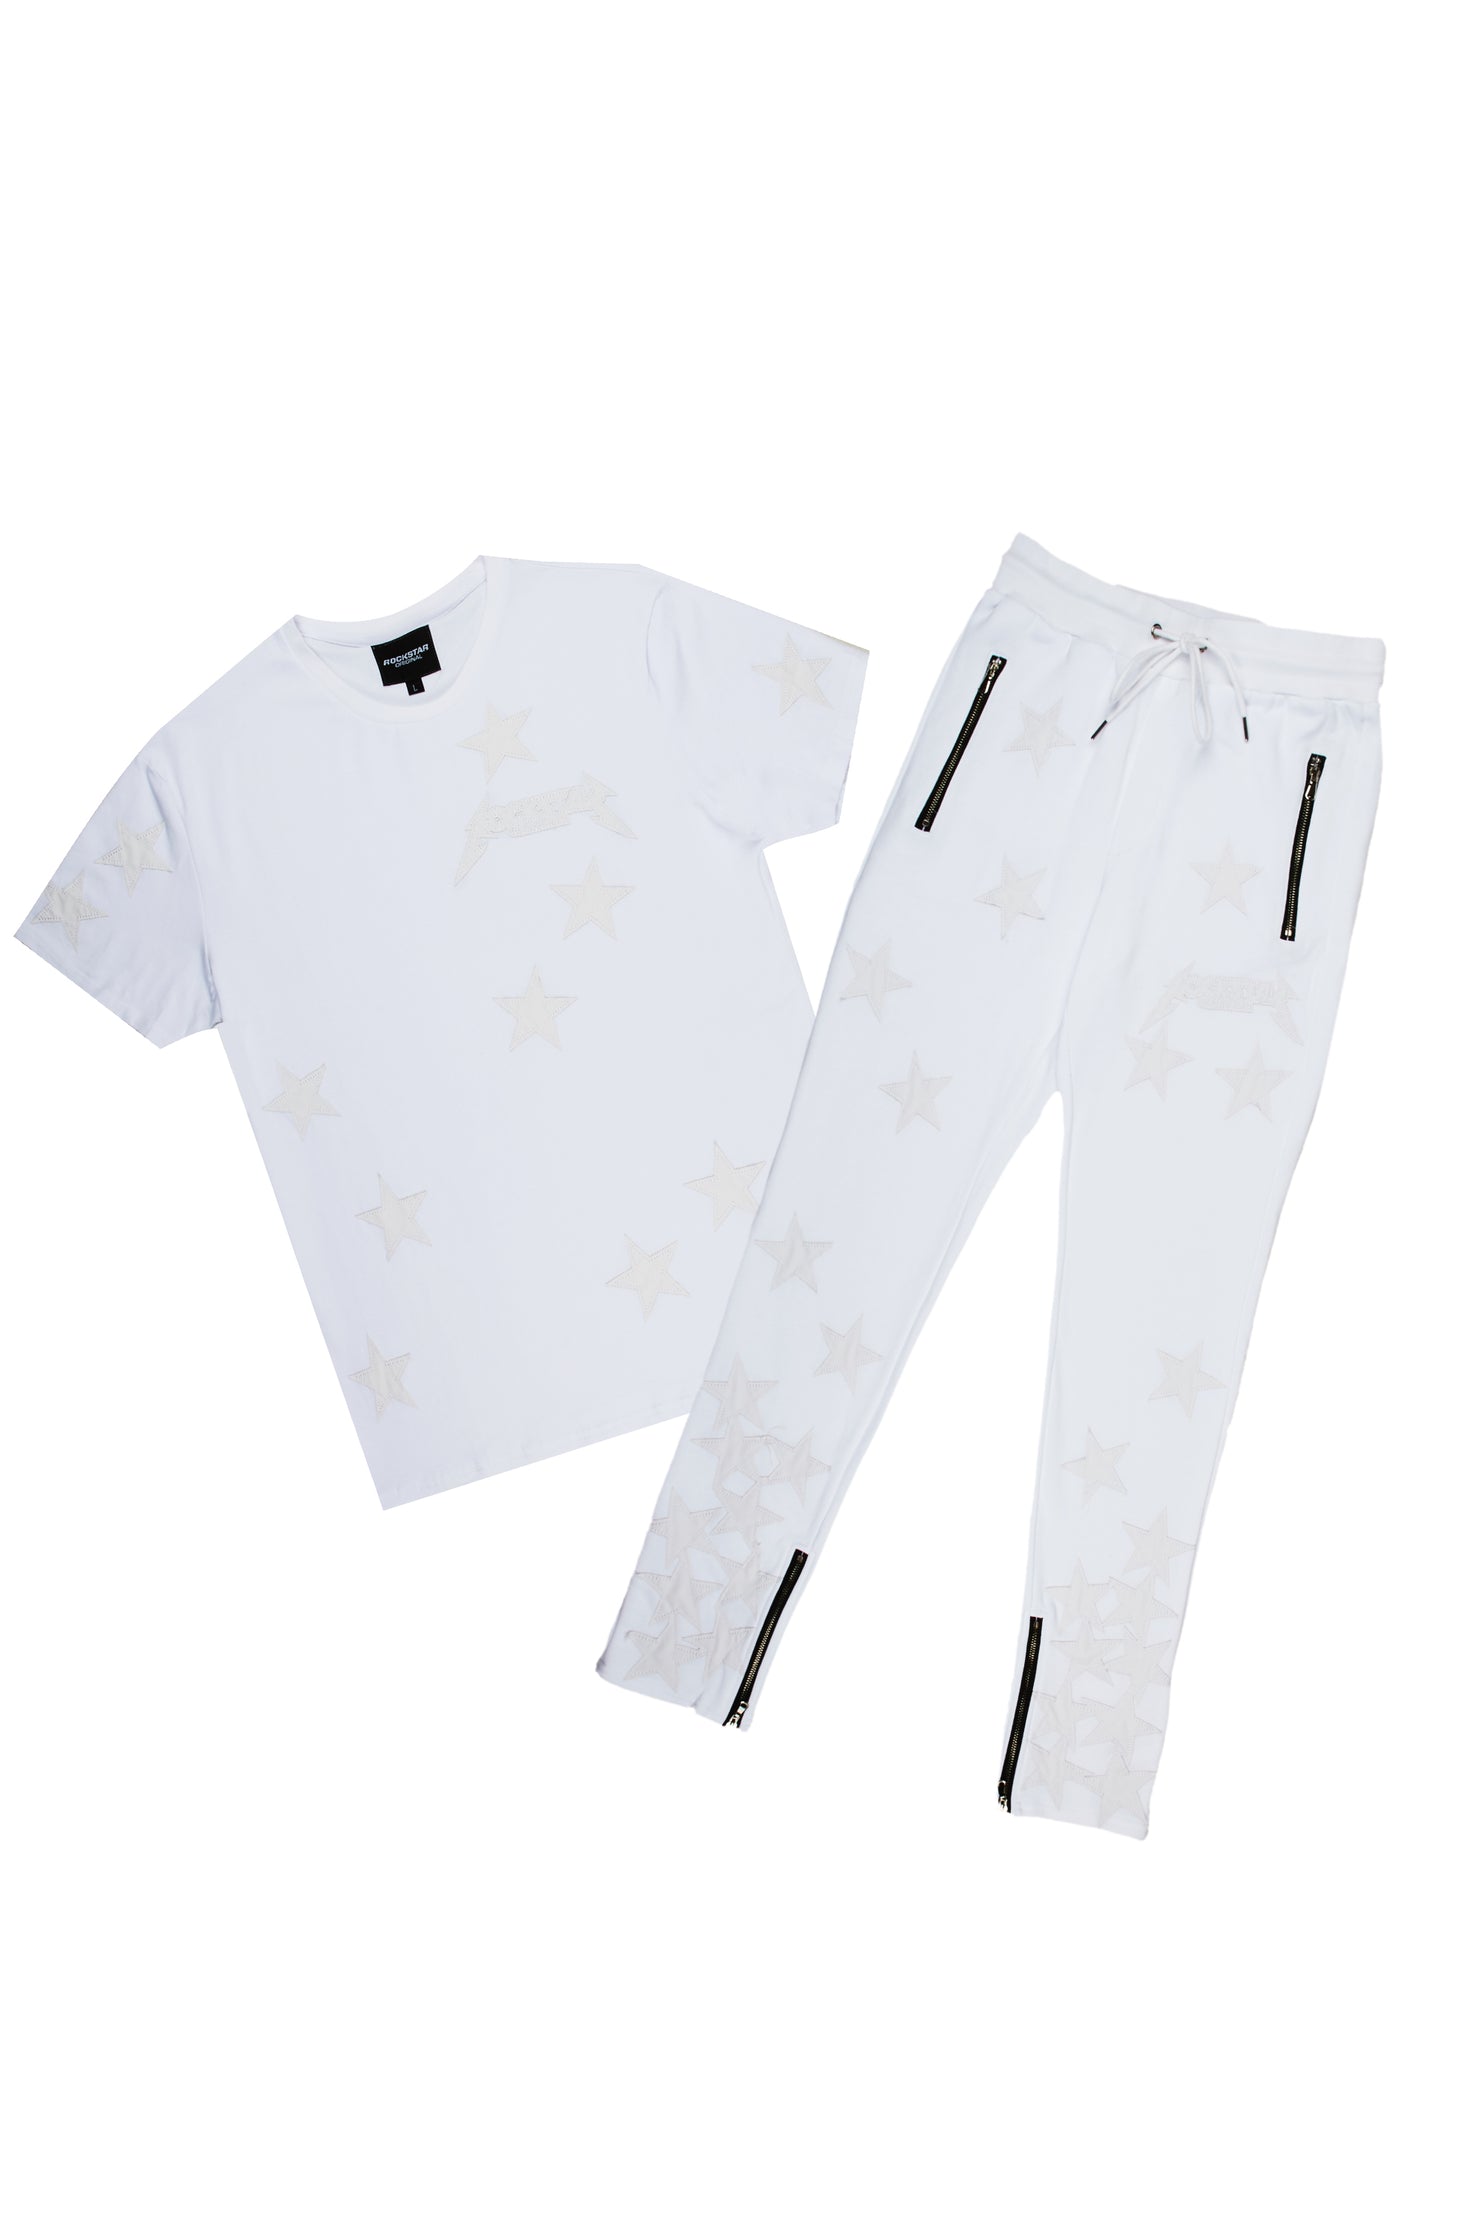 Dominic T-Shirt Track Set-White